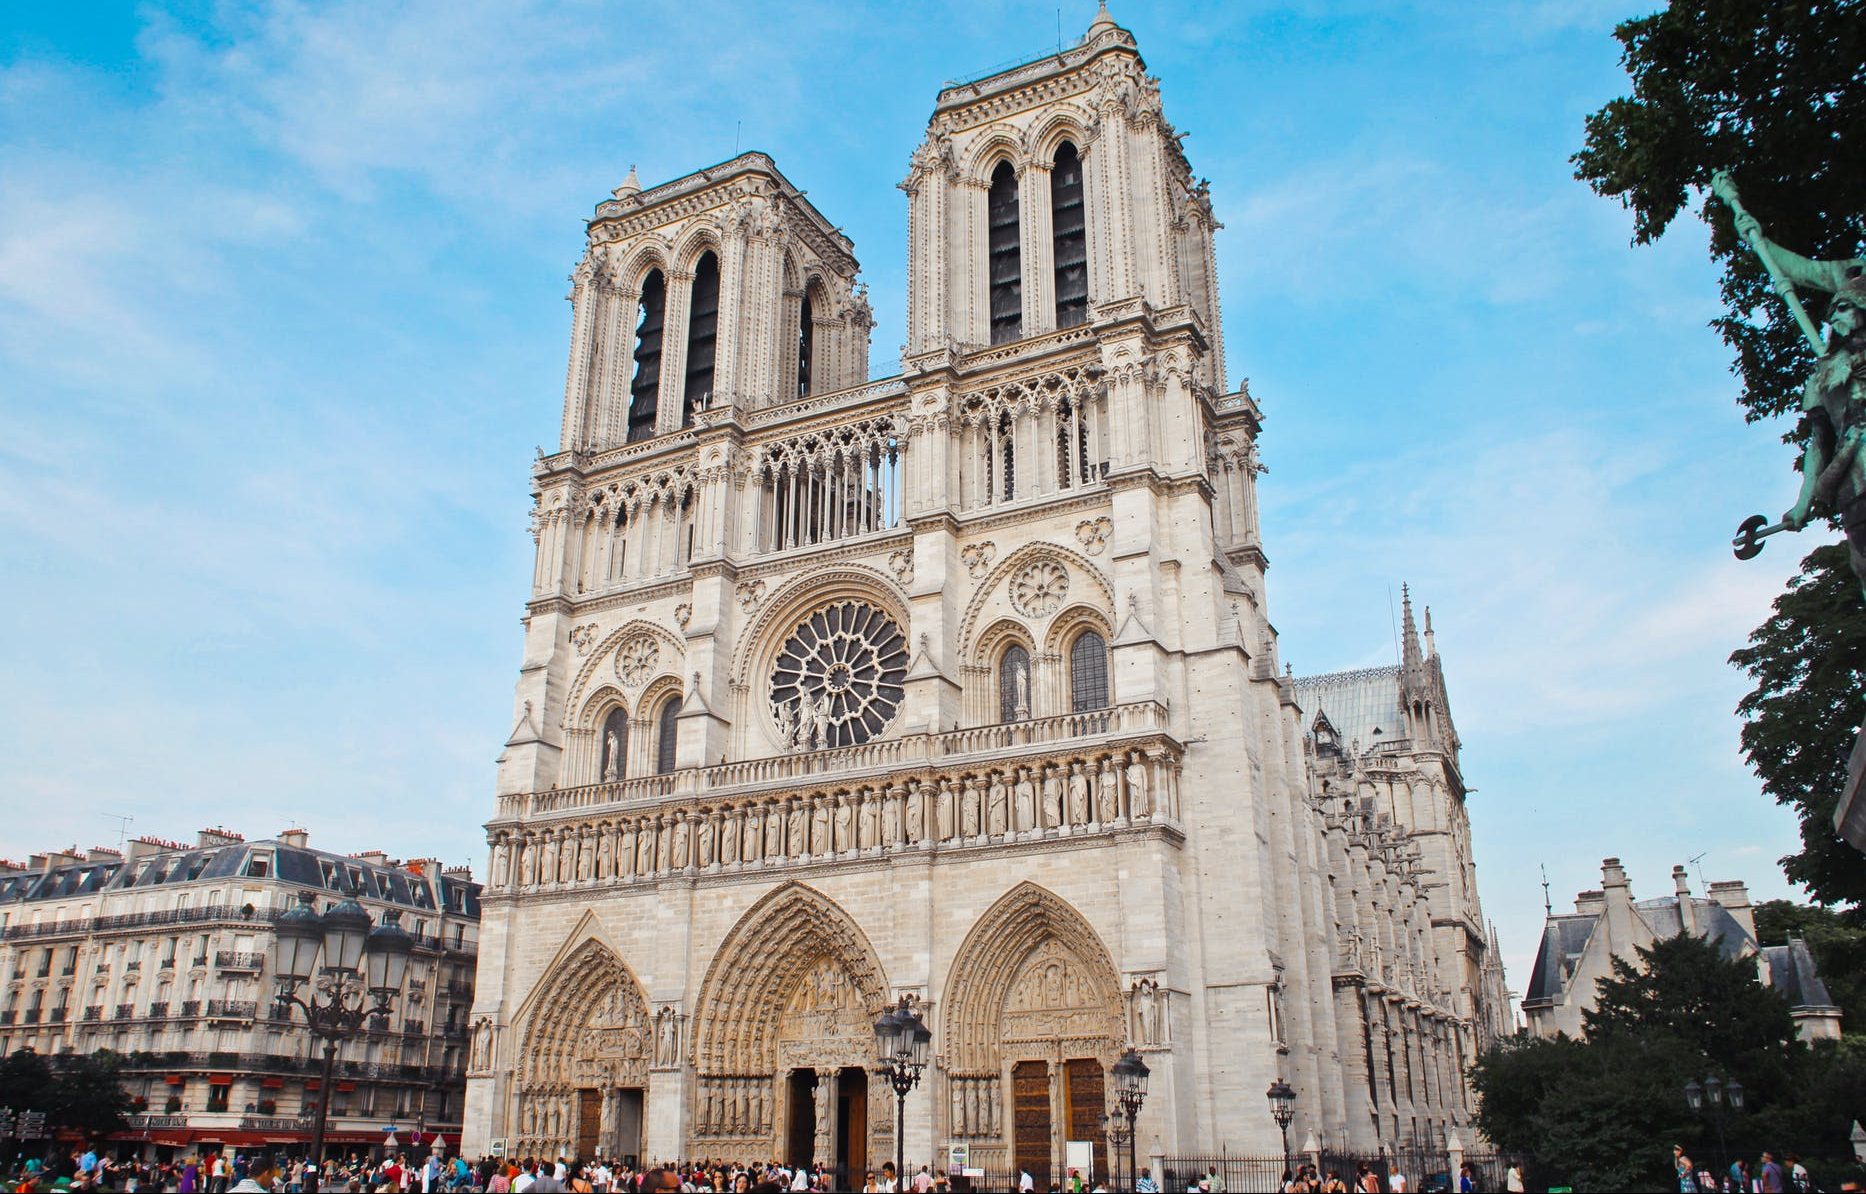 Paul D. Mooney – The Burning of Notre Dame